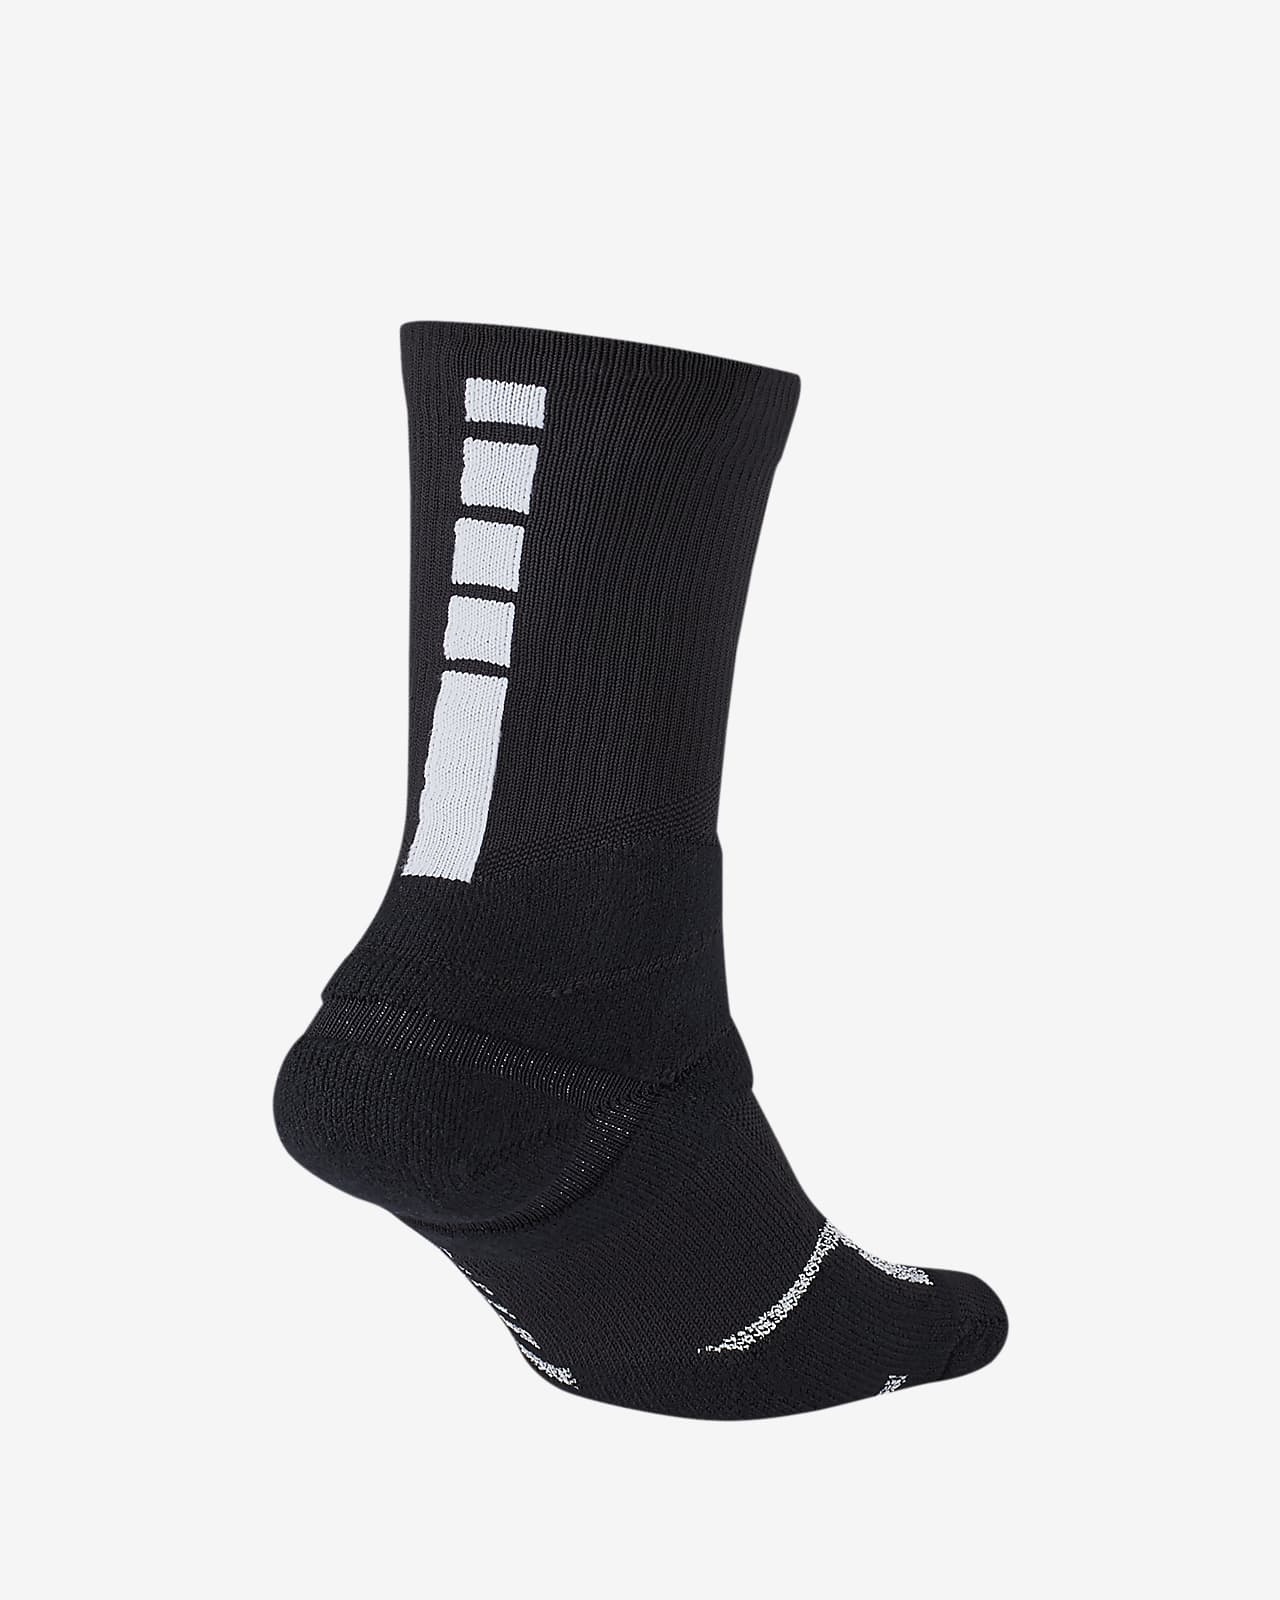 NikeGrip Power NBA Crew Socks